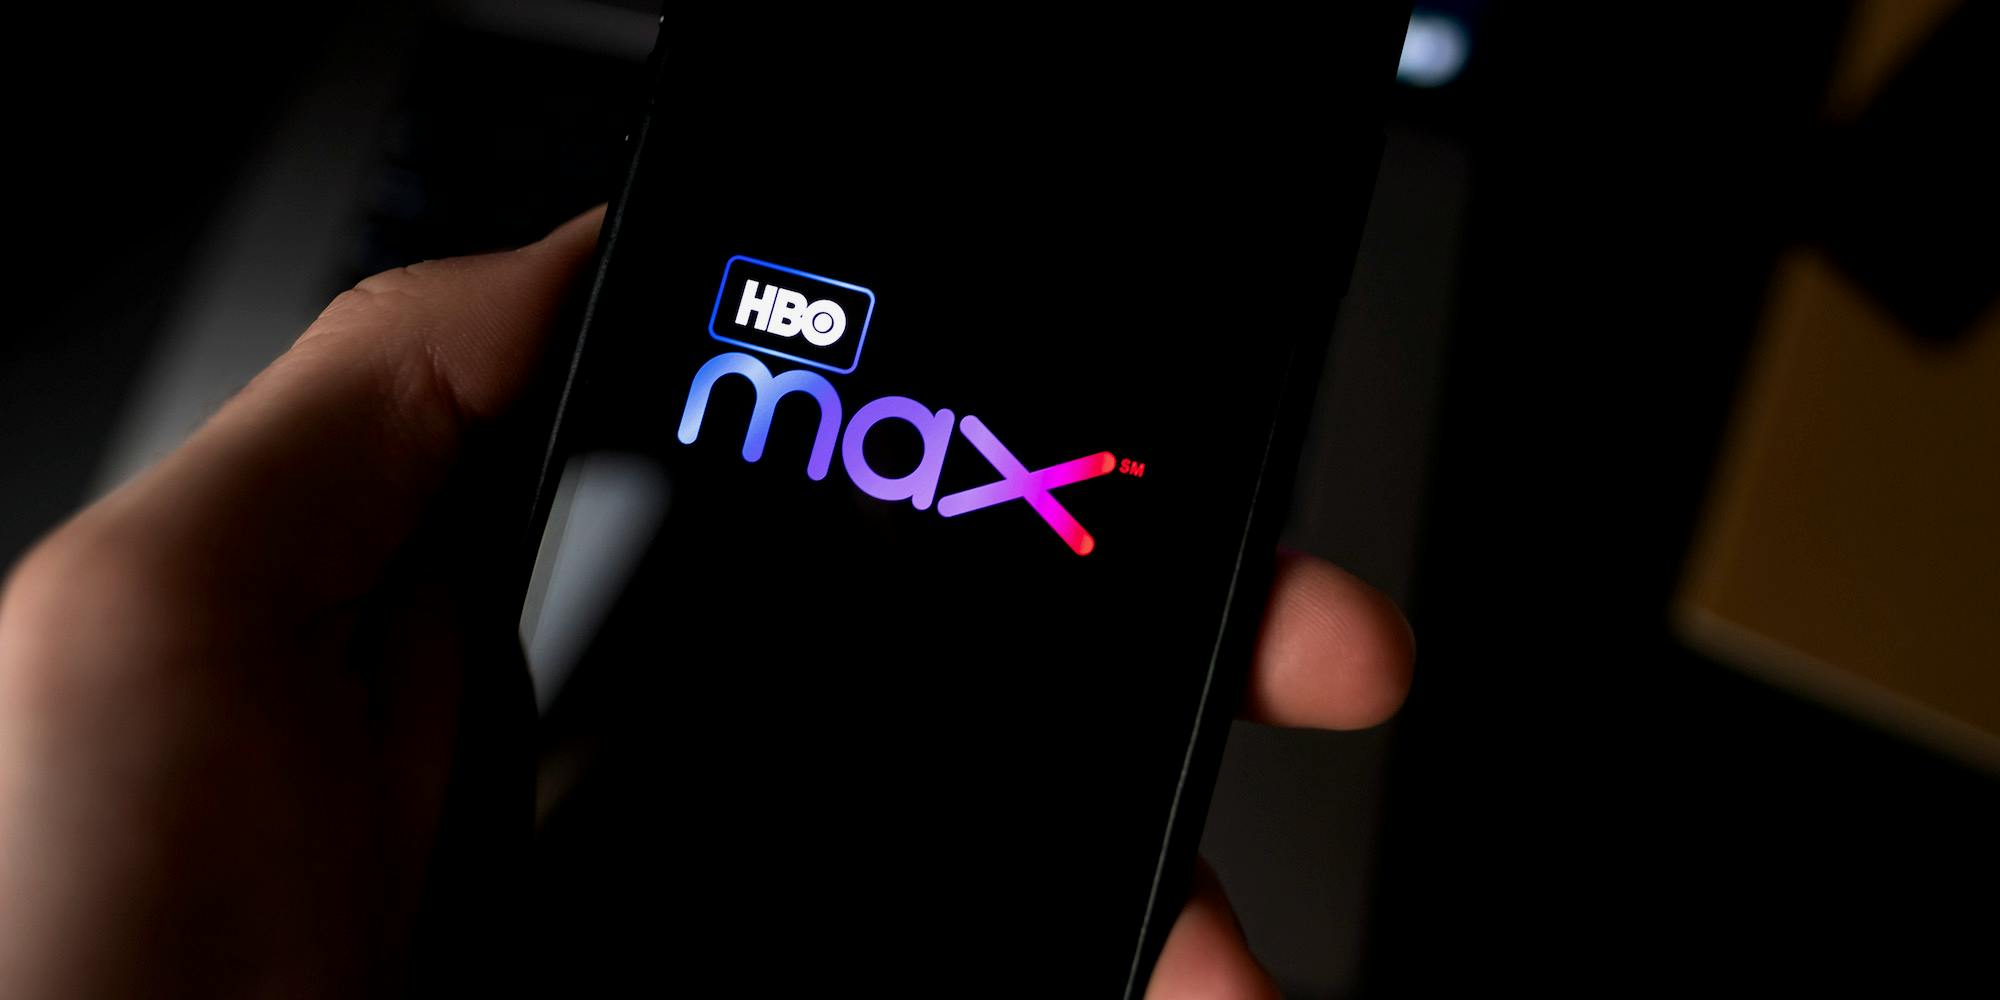 HBO max logo on smartphone screen